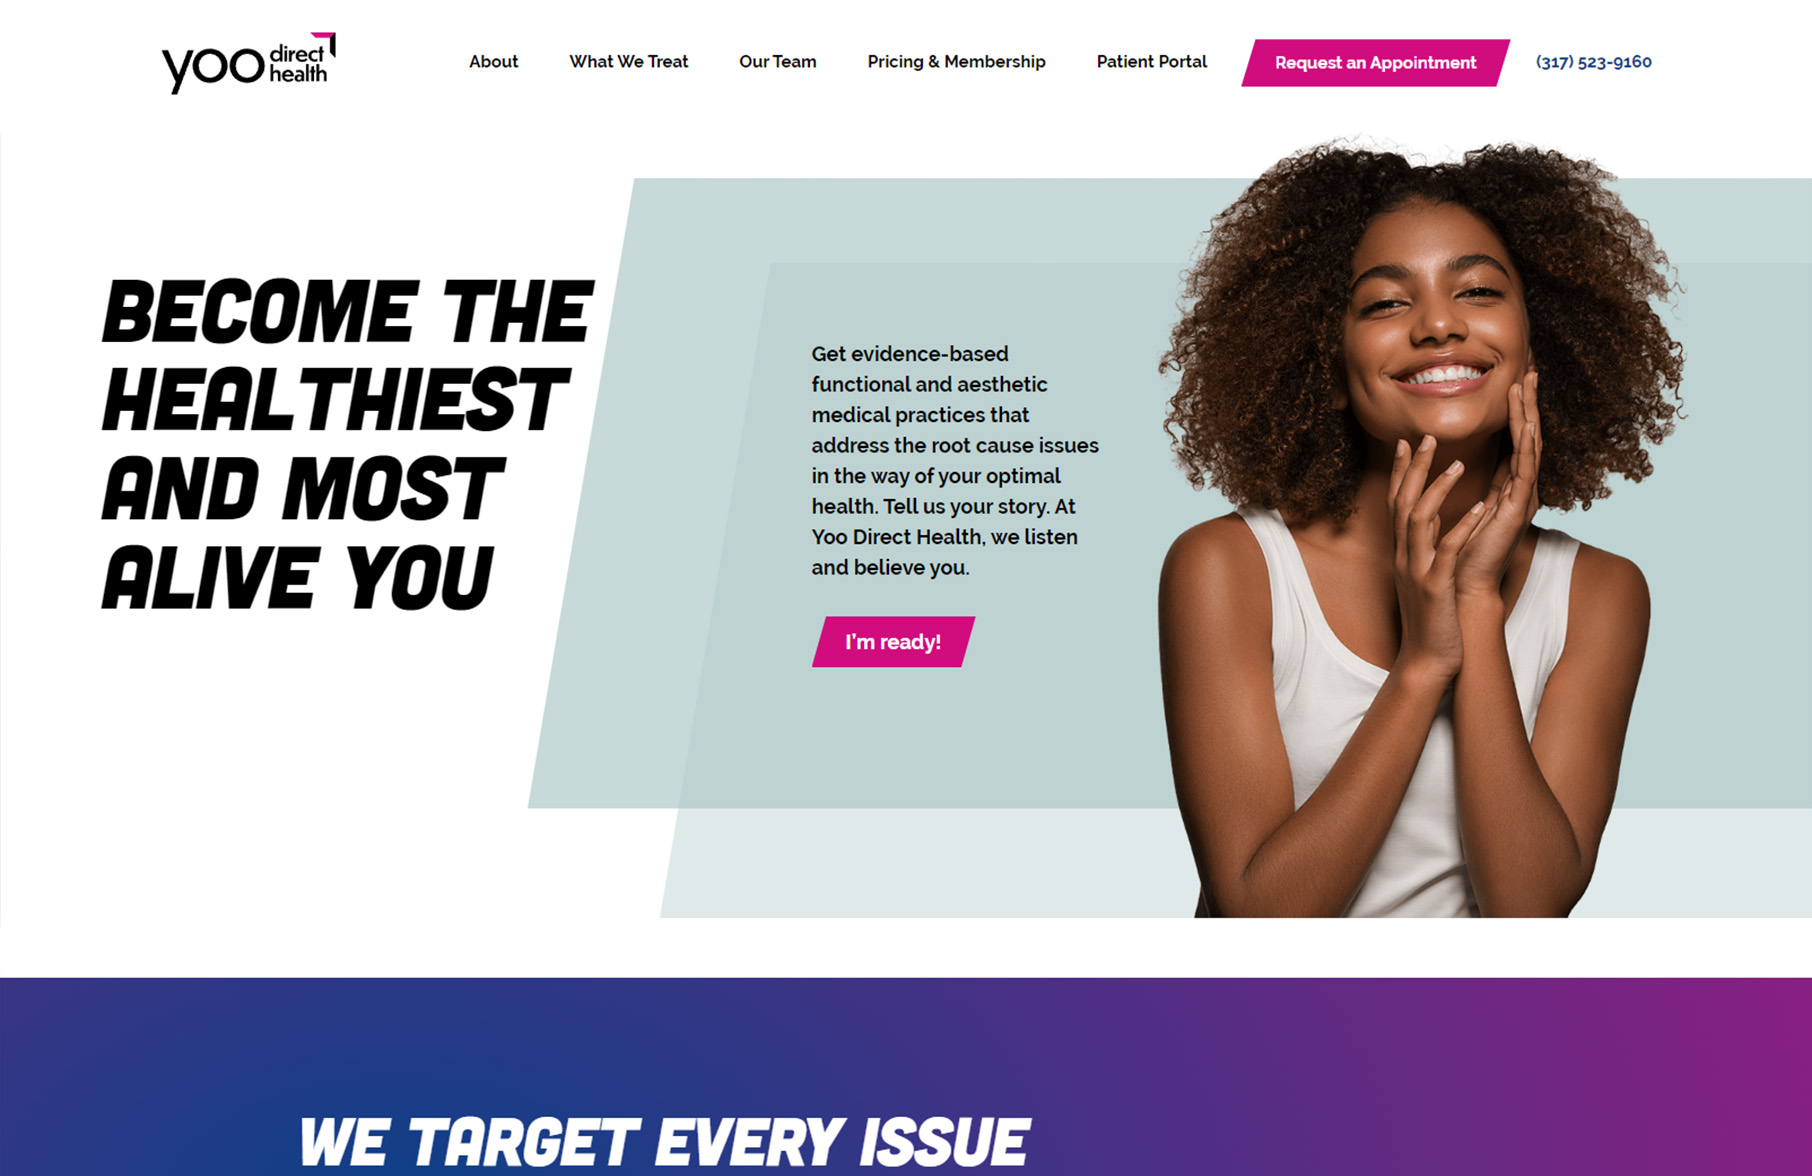 Yoo Direct Health's website homepage